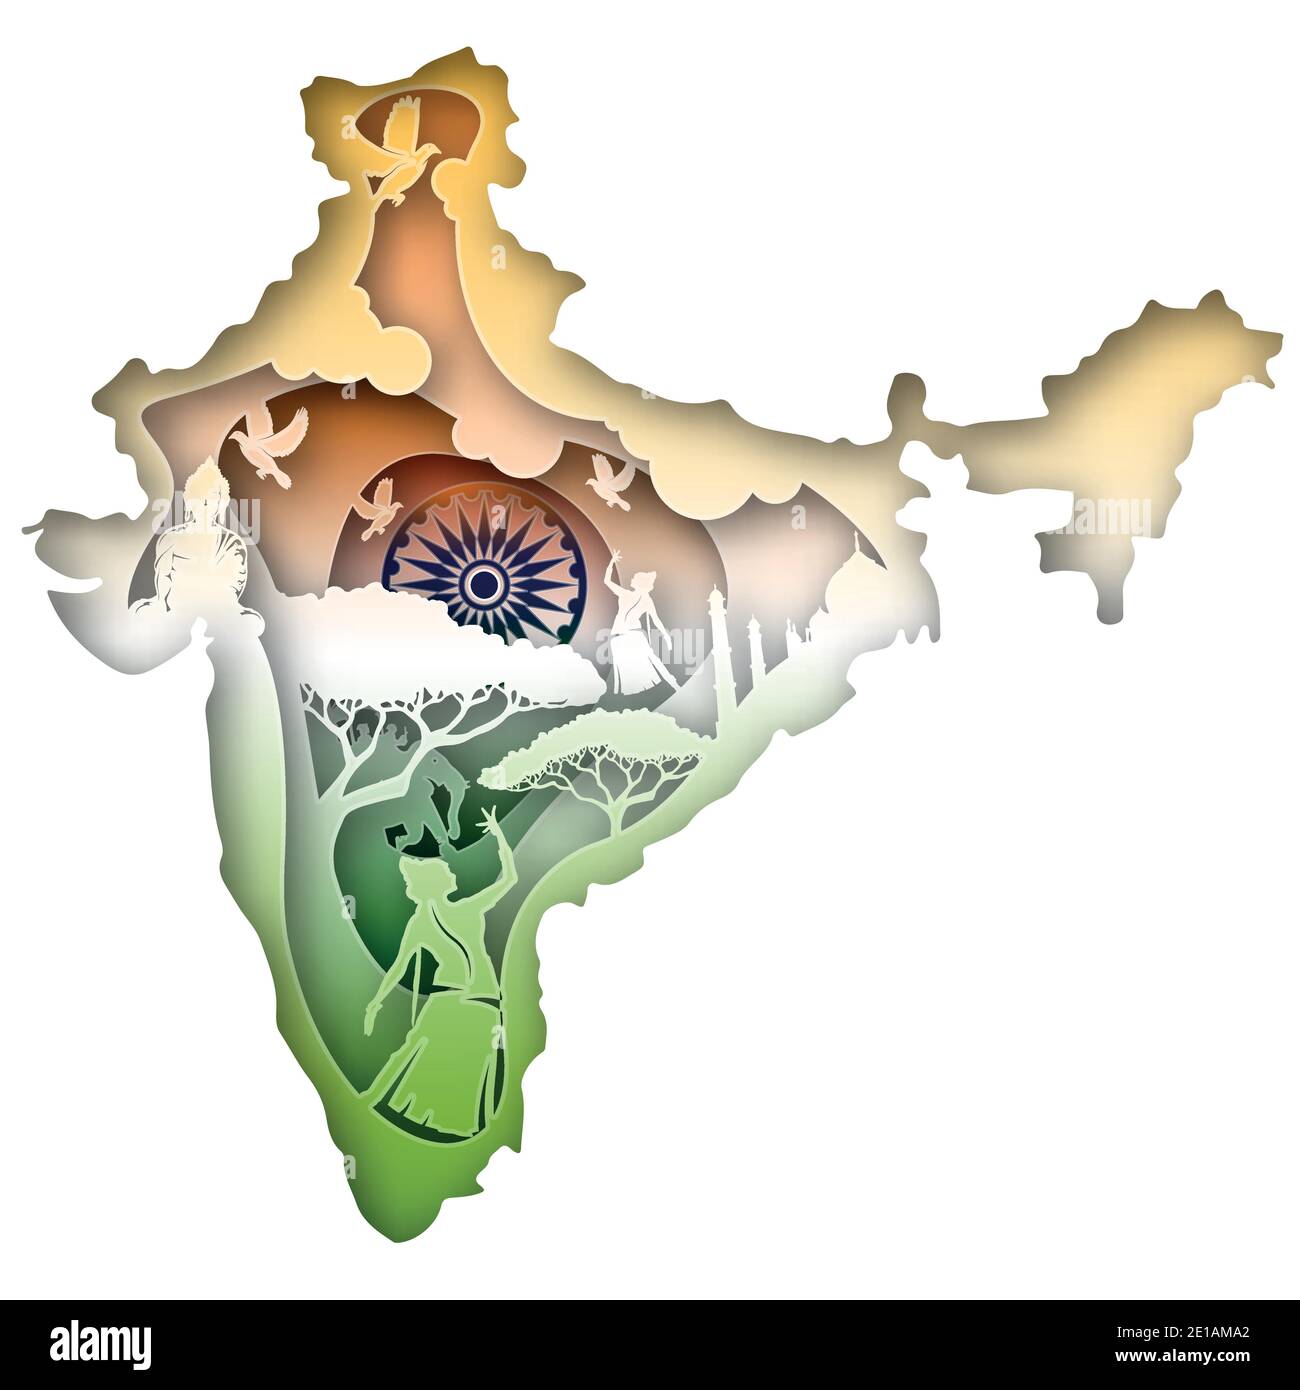 Vector India in paper art style Stock Vector